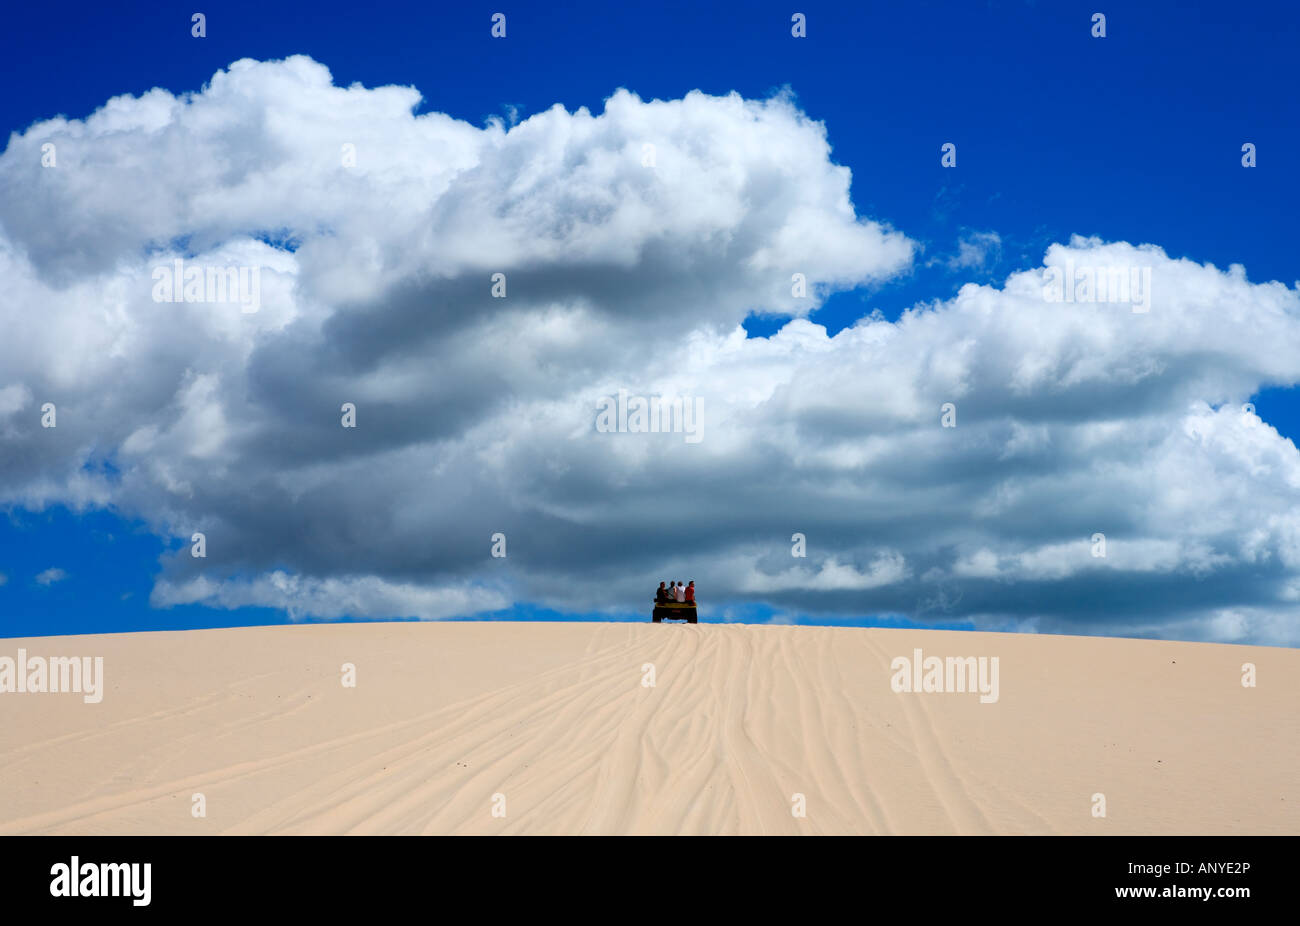 sand dune of tatajuba near jericoacoara in ceara state in brazil Stock Photo